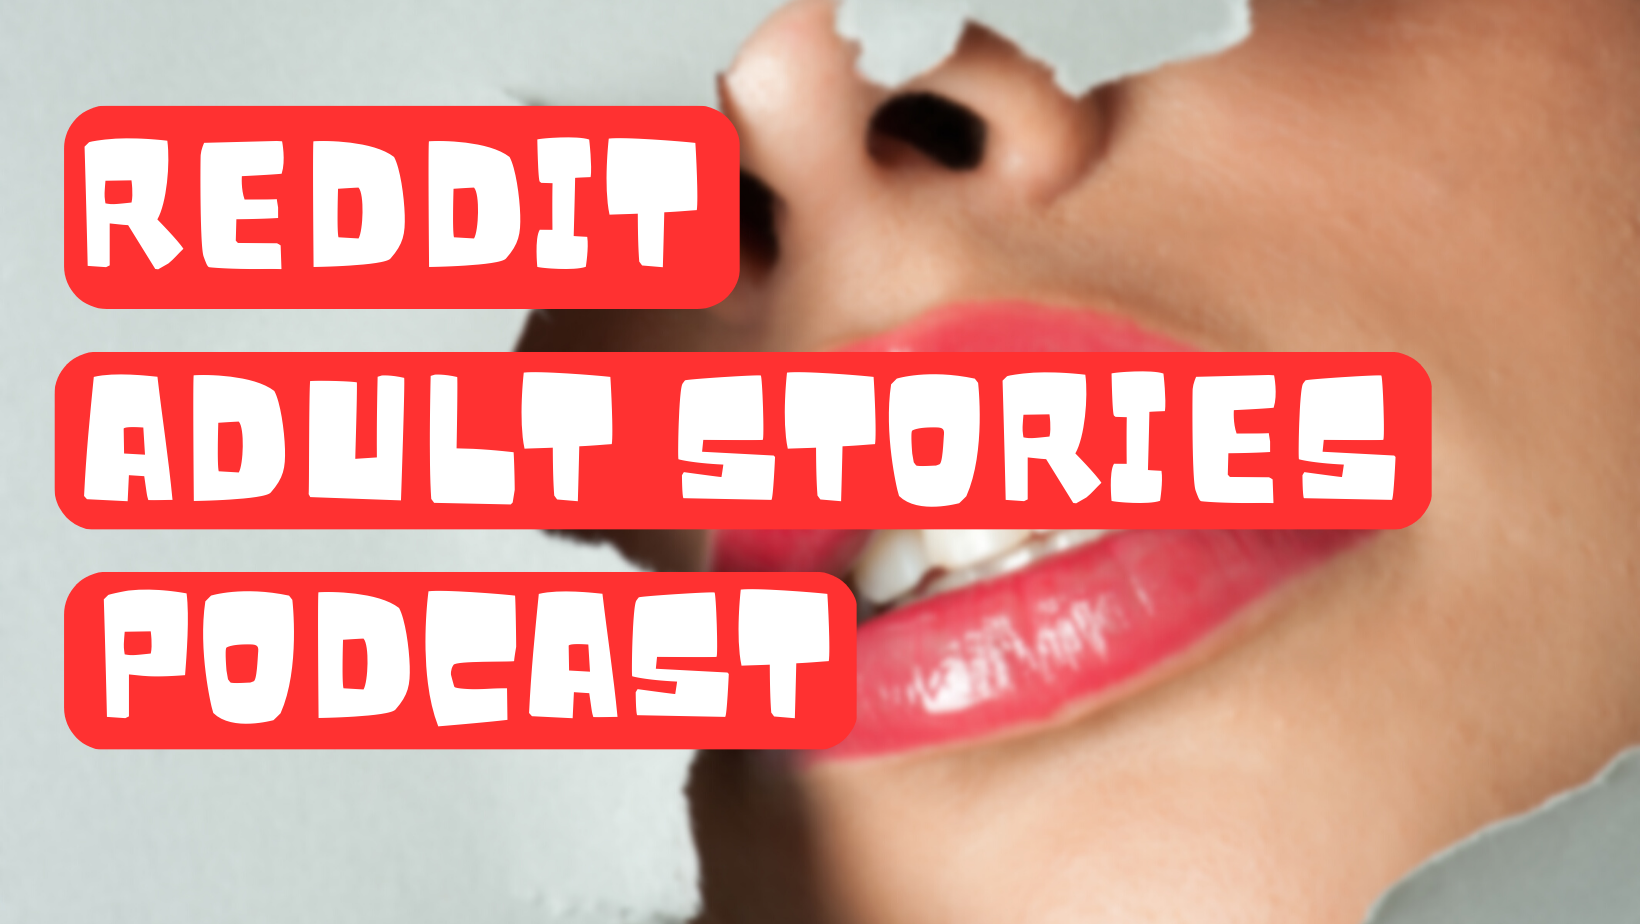 Reddit Adult Stories Podcast – Listen Here